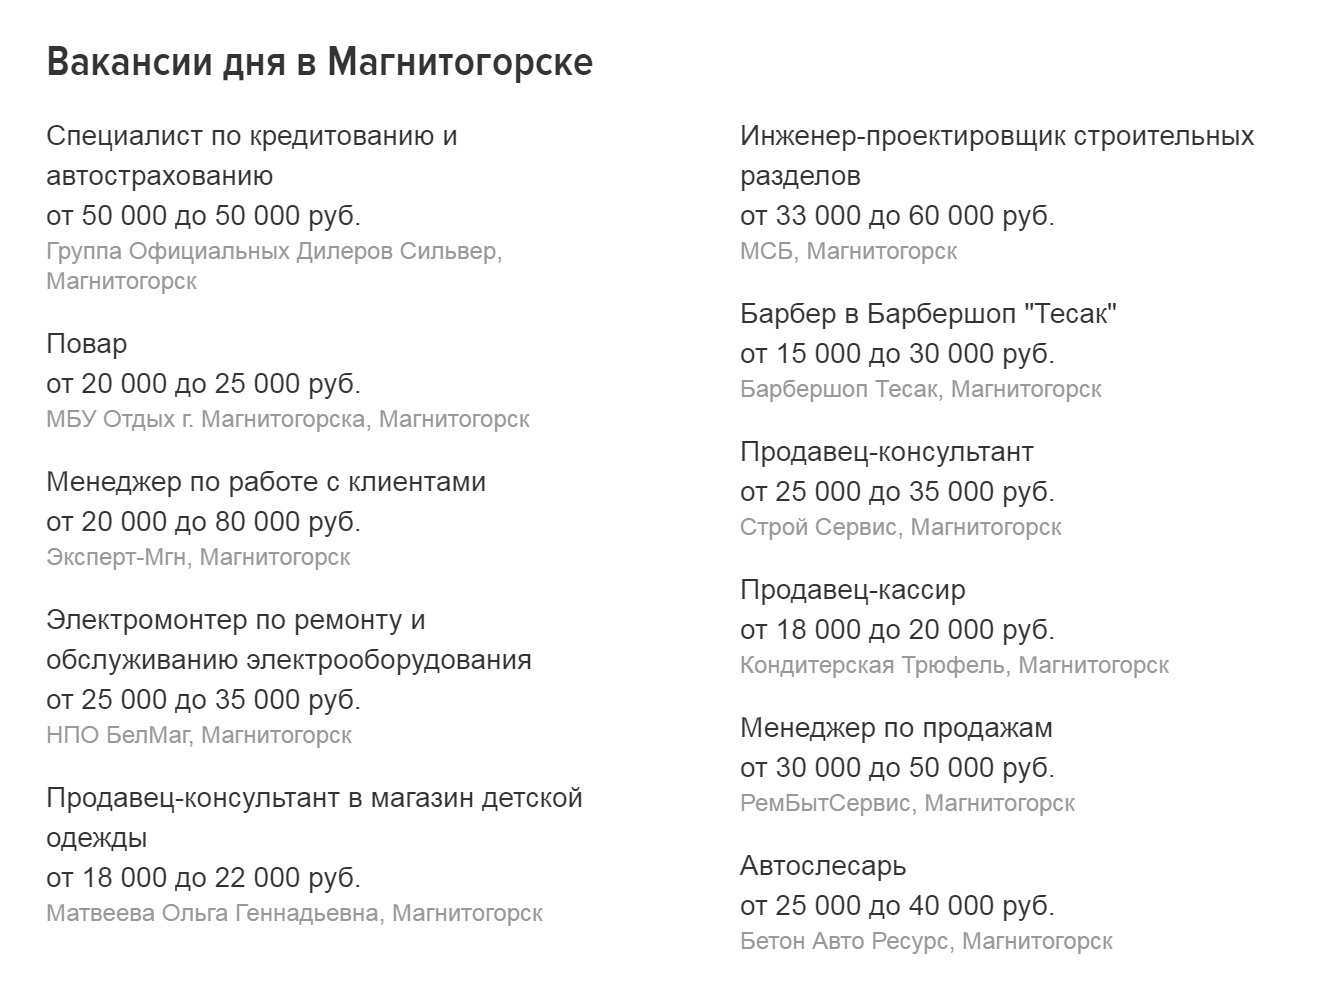 «Хедхантер» предлагает вакансии в Магнитогорске с зарплатами от 20 000 ₽